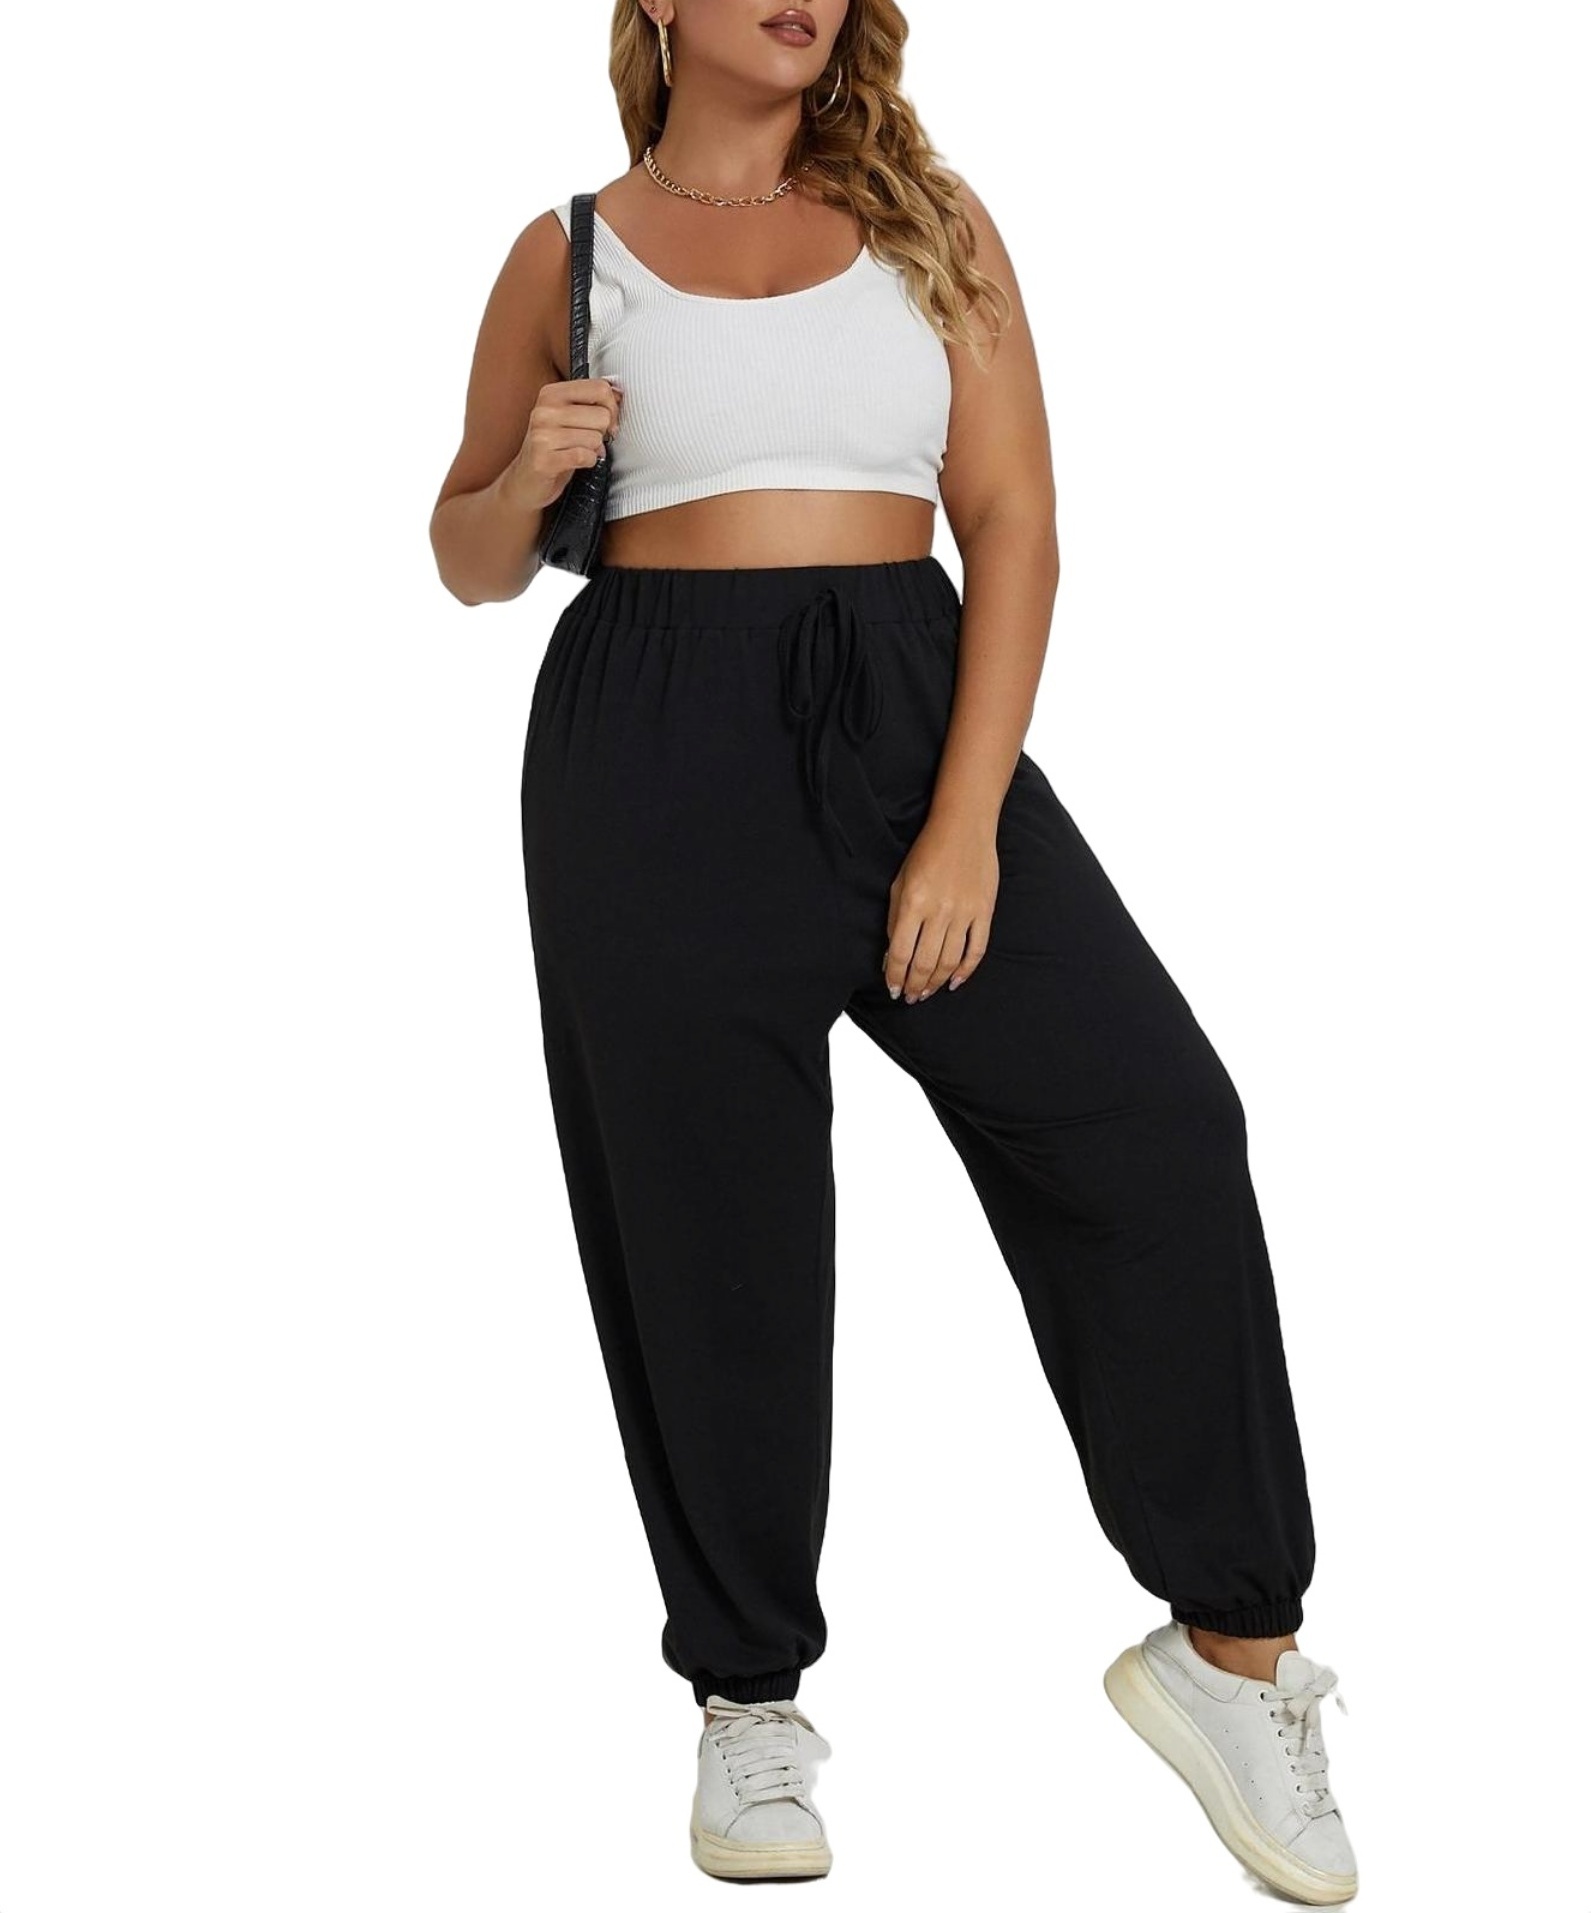 Solid Jogger Black Plus Size Sweatpants - Walmart.com